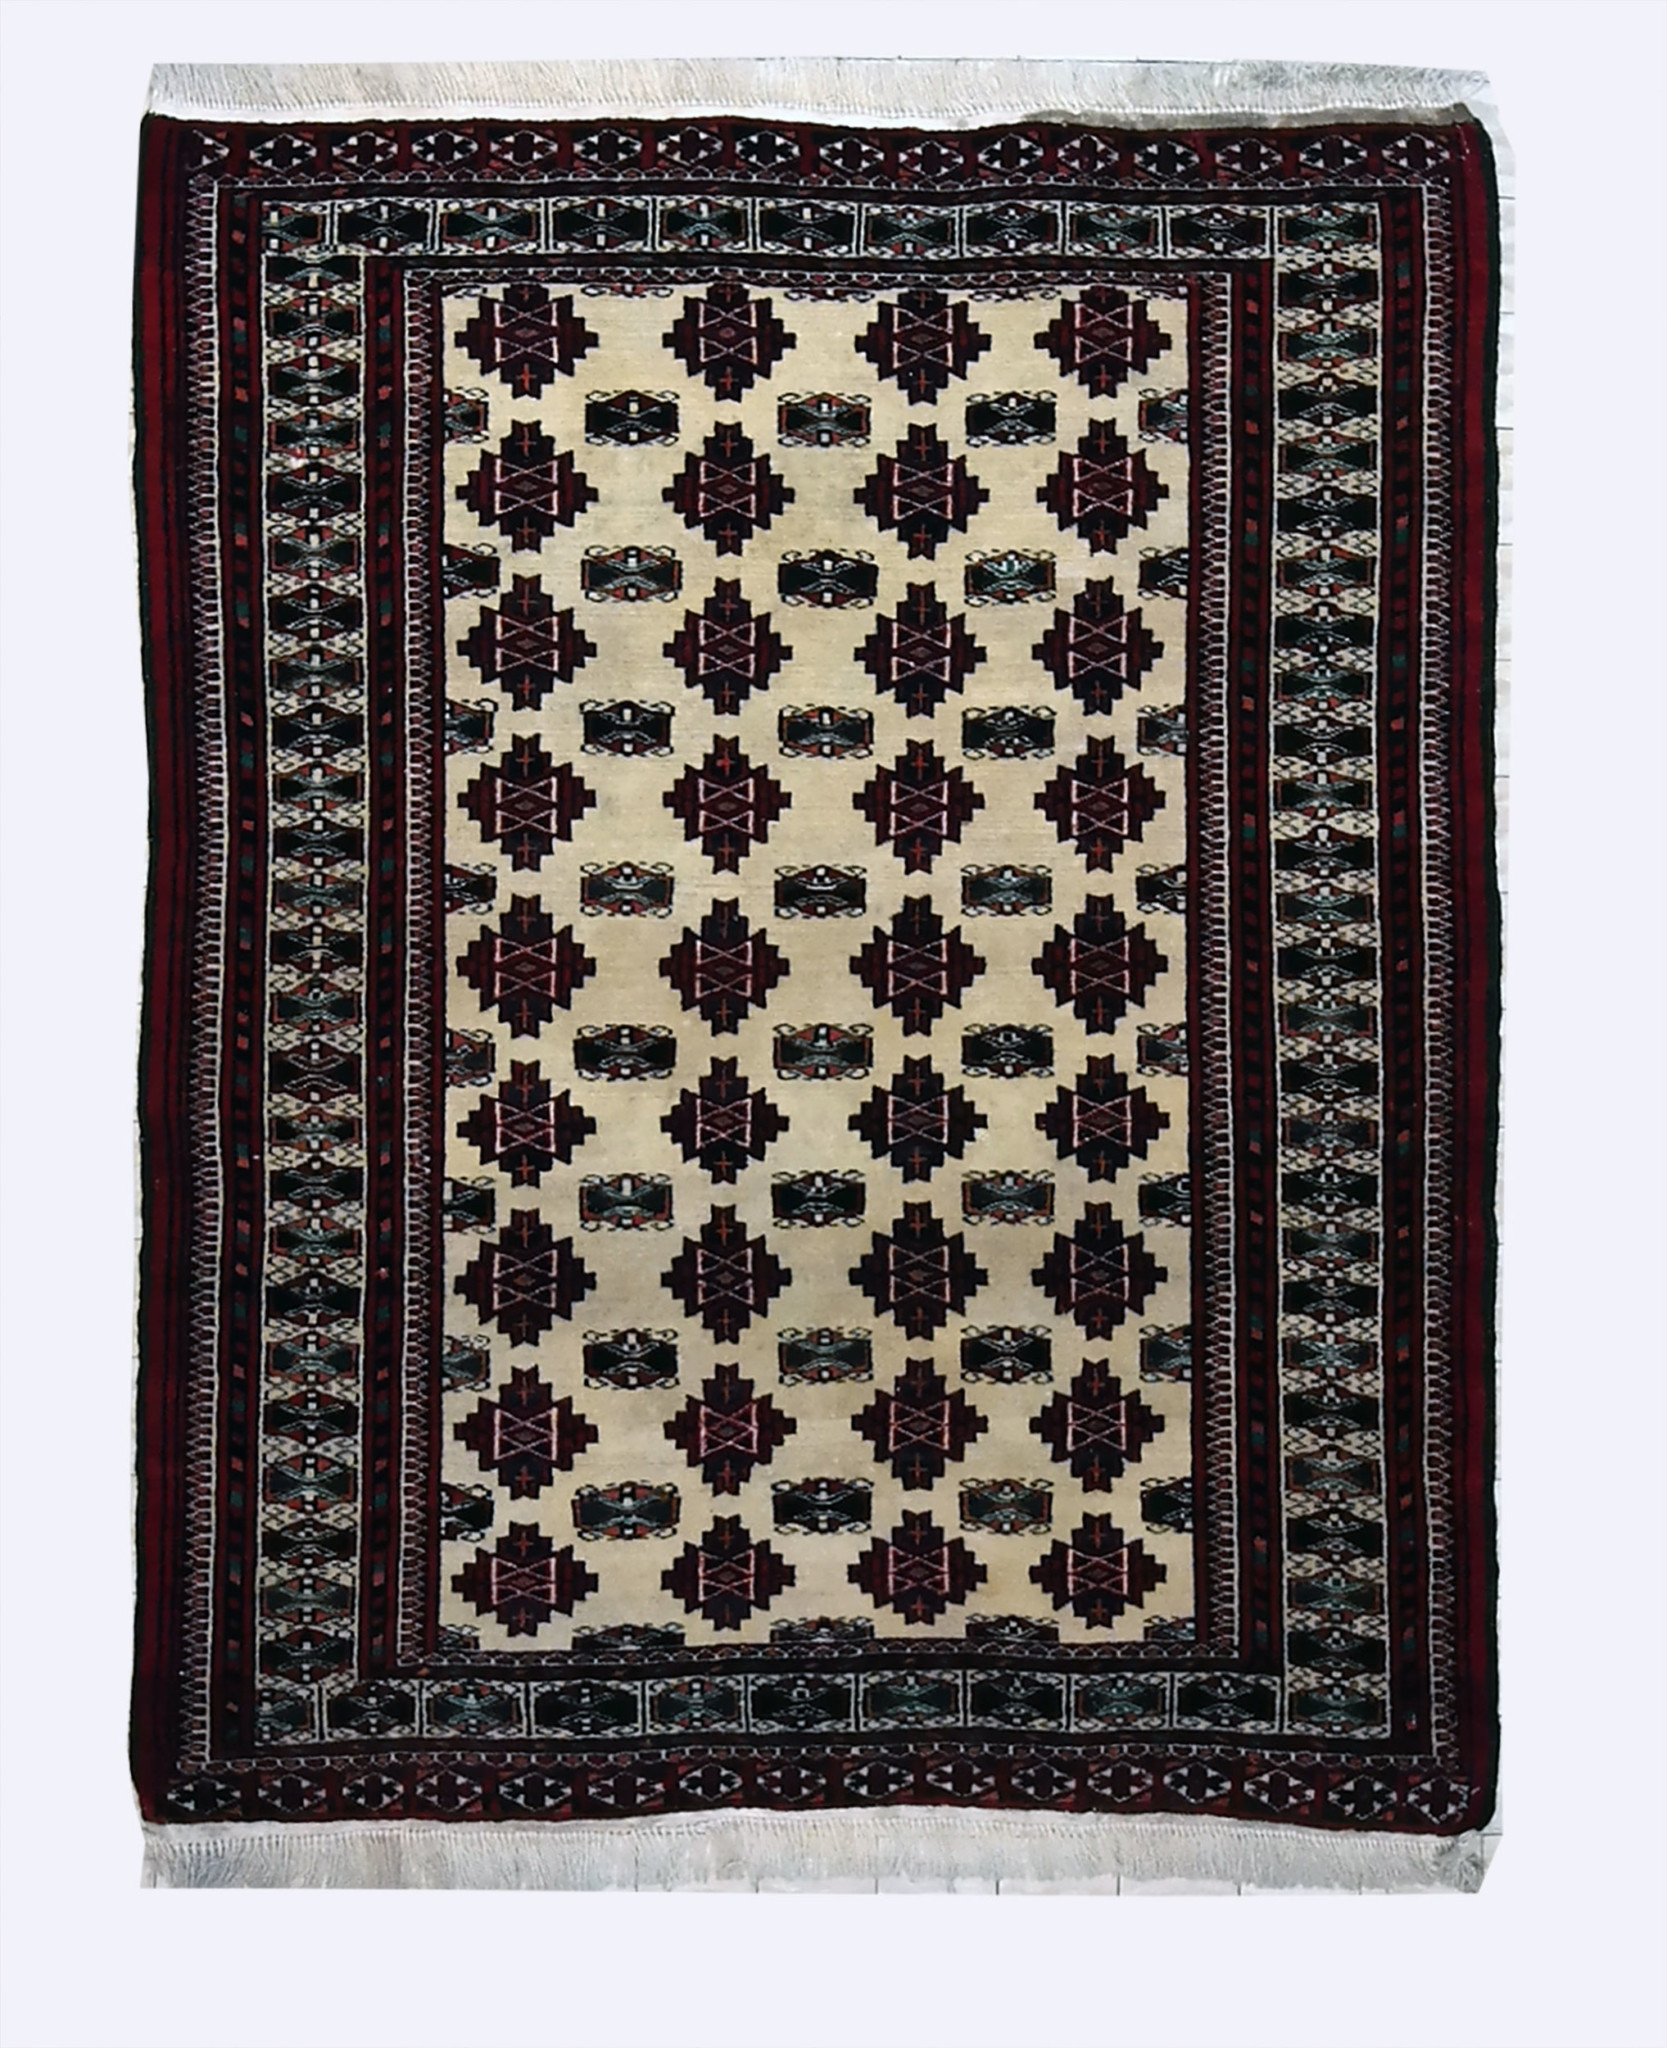 Turkman carpet